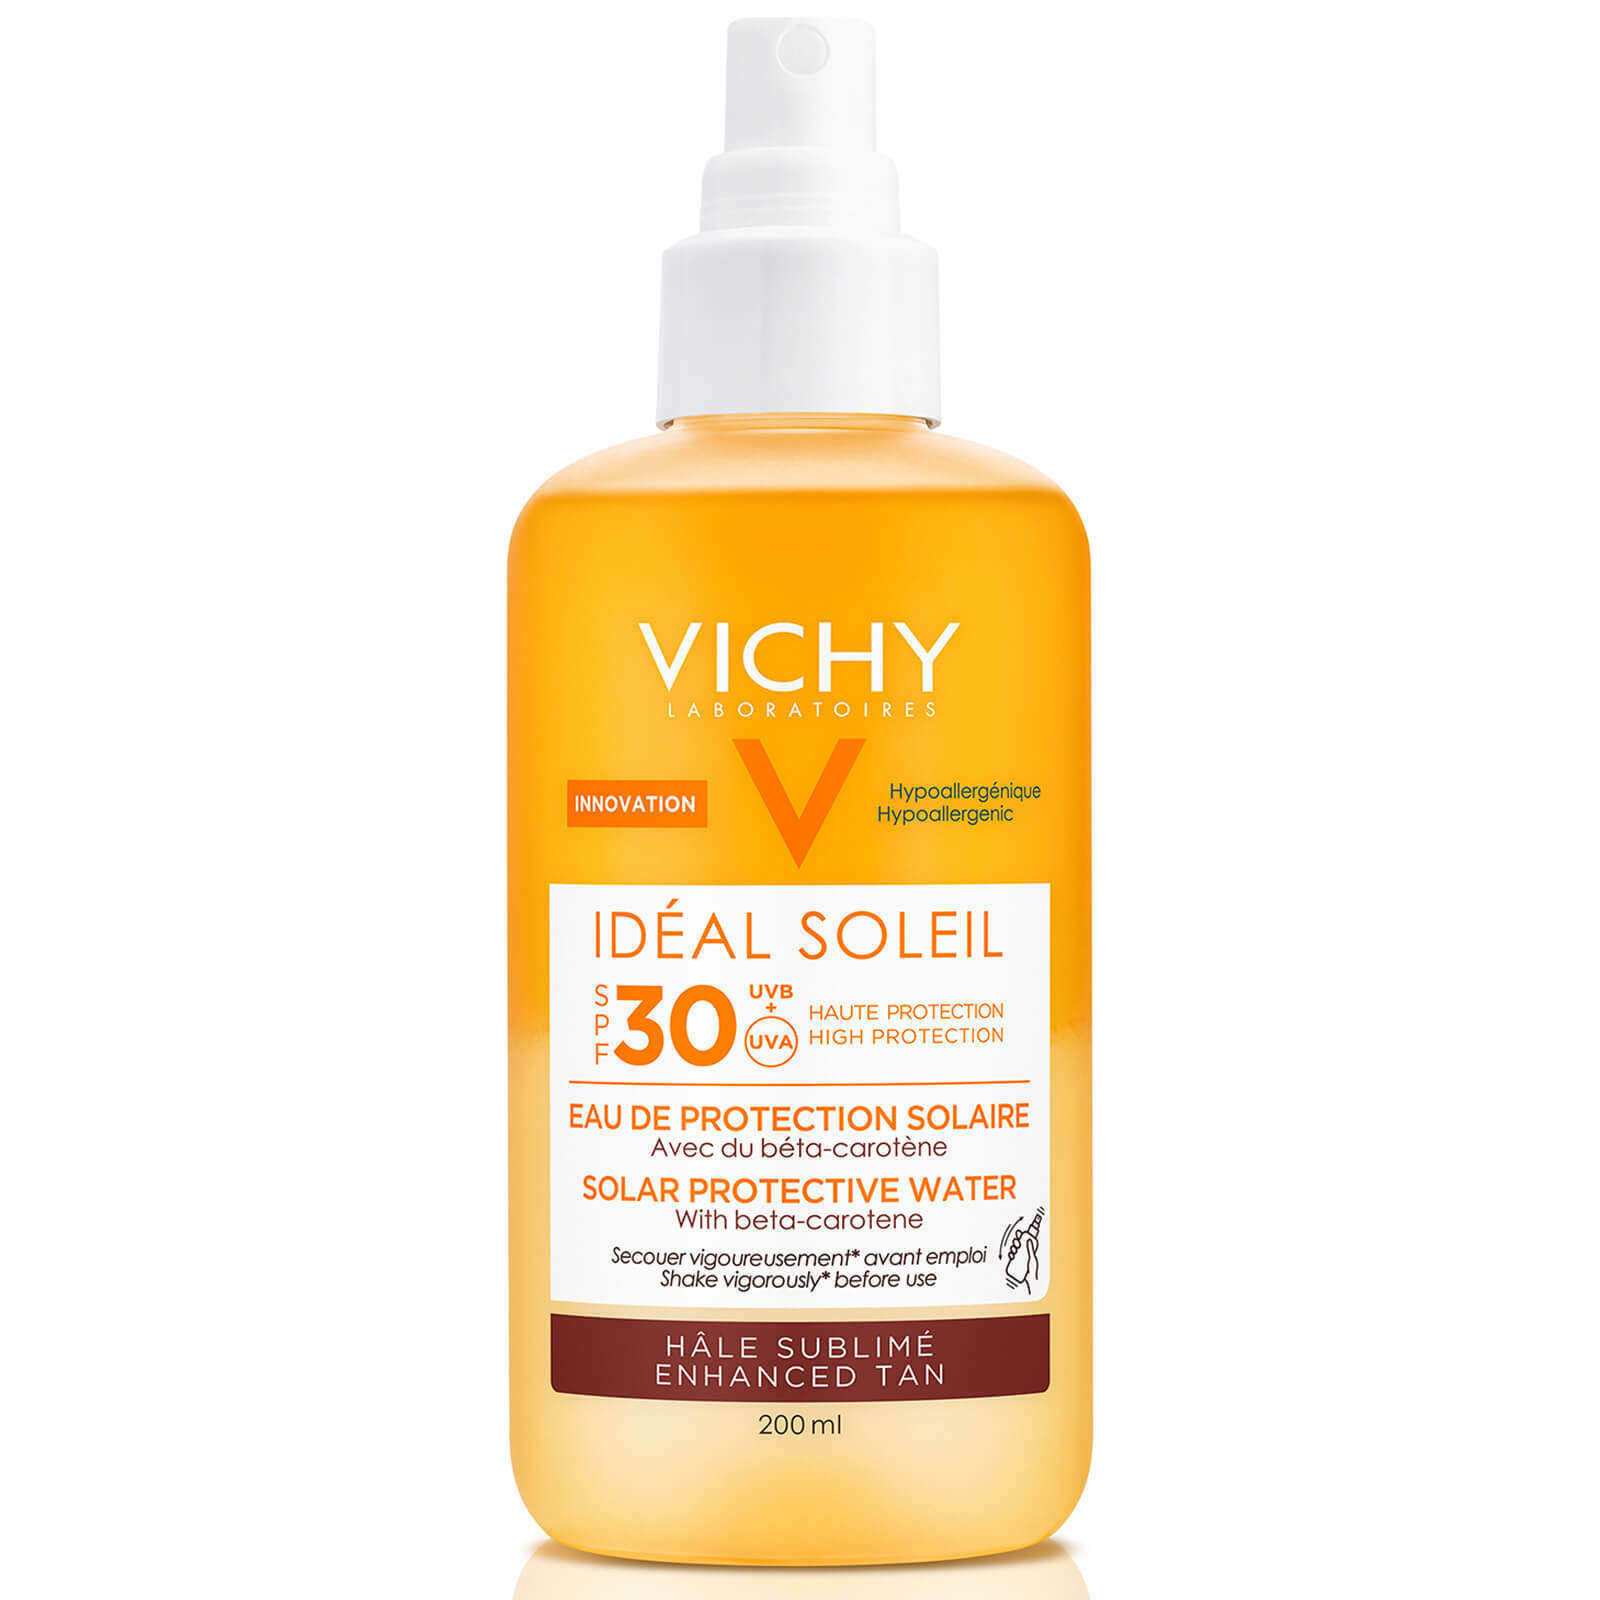 Vichy Idéal Soleil Solar Protective Water - Tan, 200ml